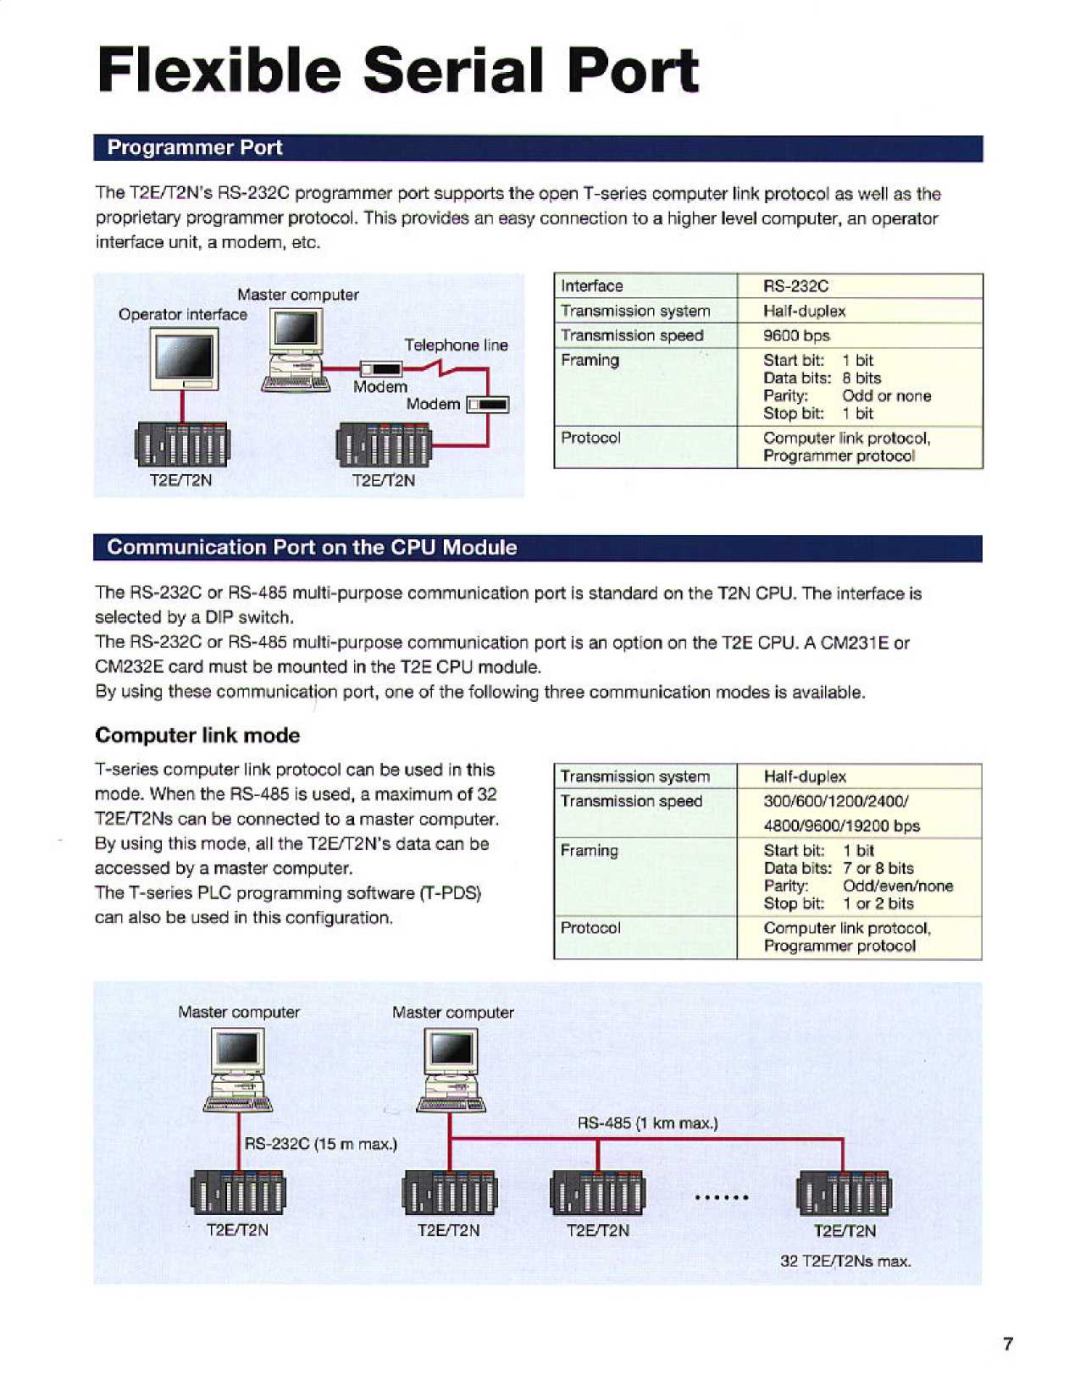 Toshiba T2E manual Flexible Serial Port, Programmer Port, Communication Port on the CPU Module, Computer link mode 